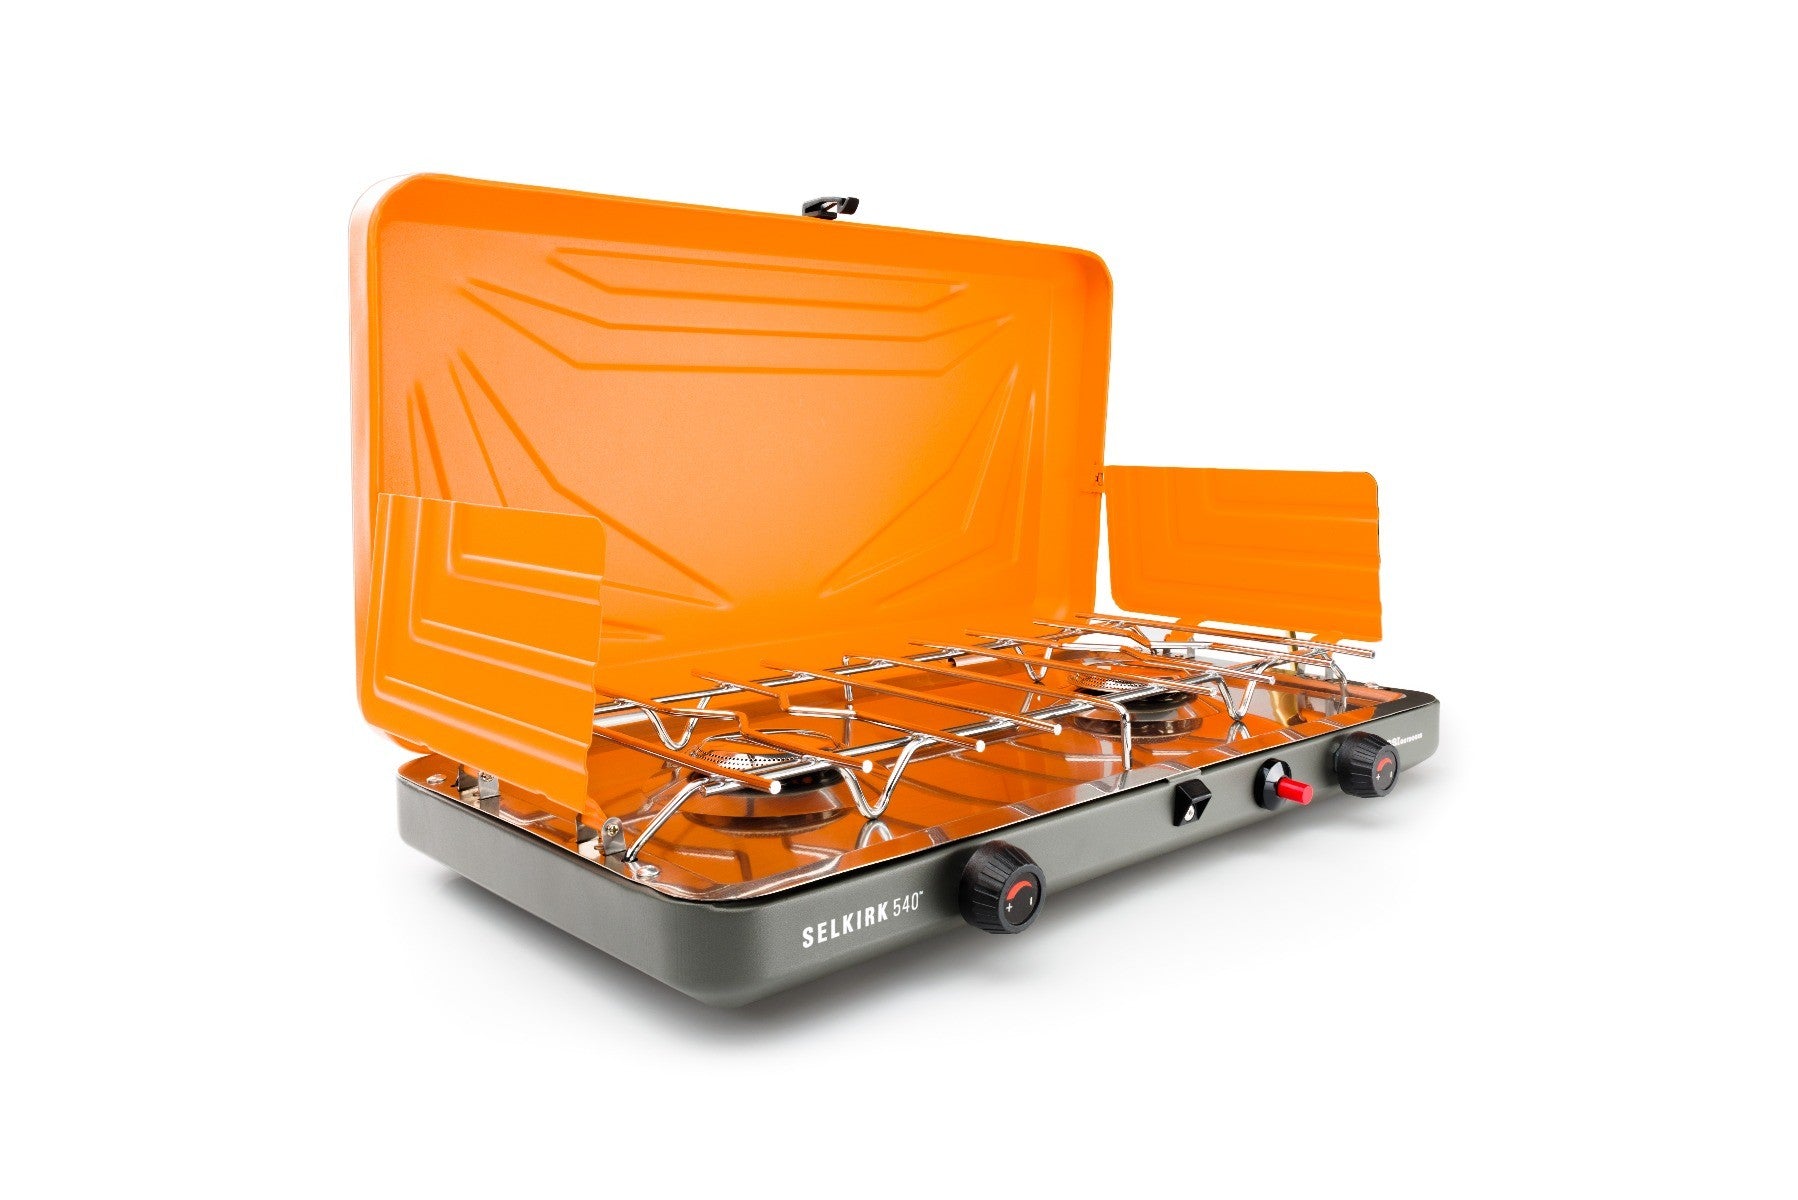 2-Burner High Output Portable Table Top Propane Camping Stove